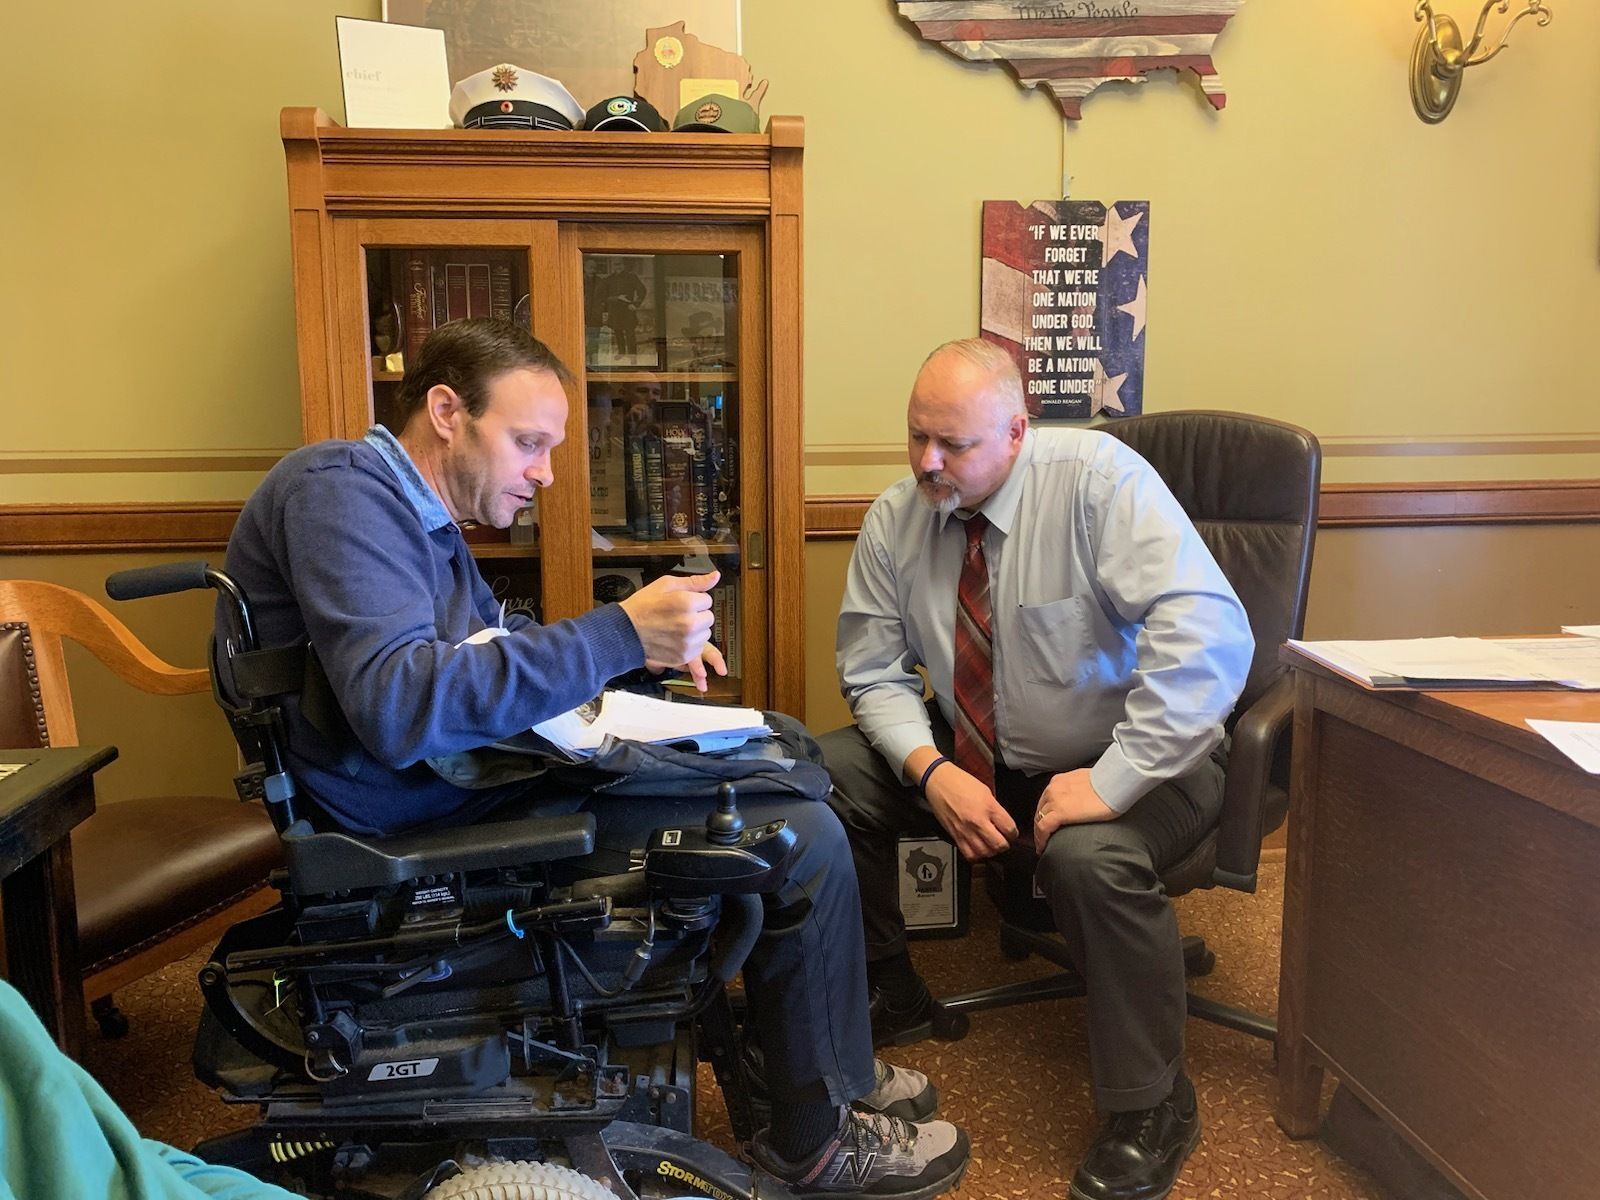 Man in wheelchair (left) talks to man sitting (right)